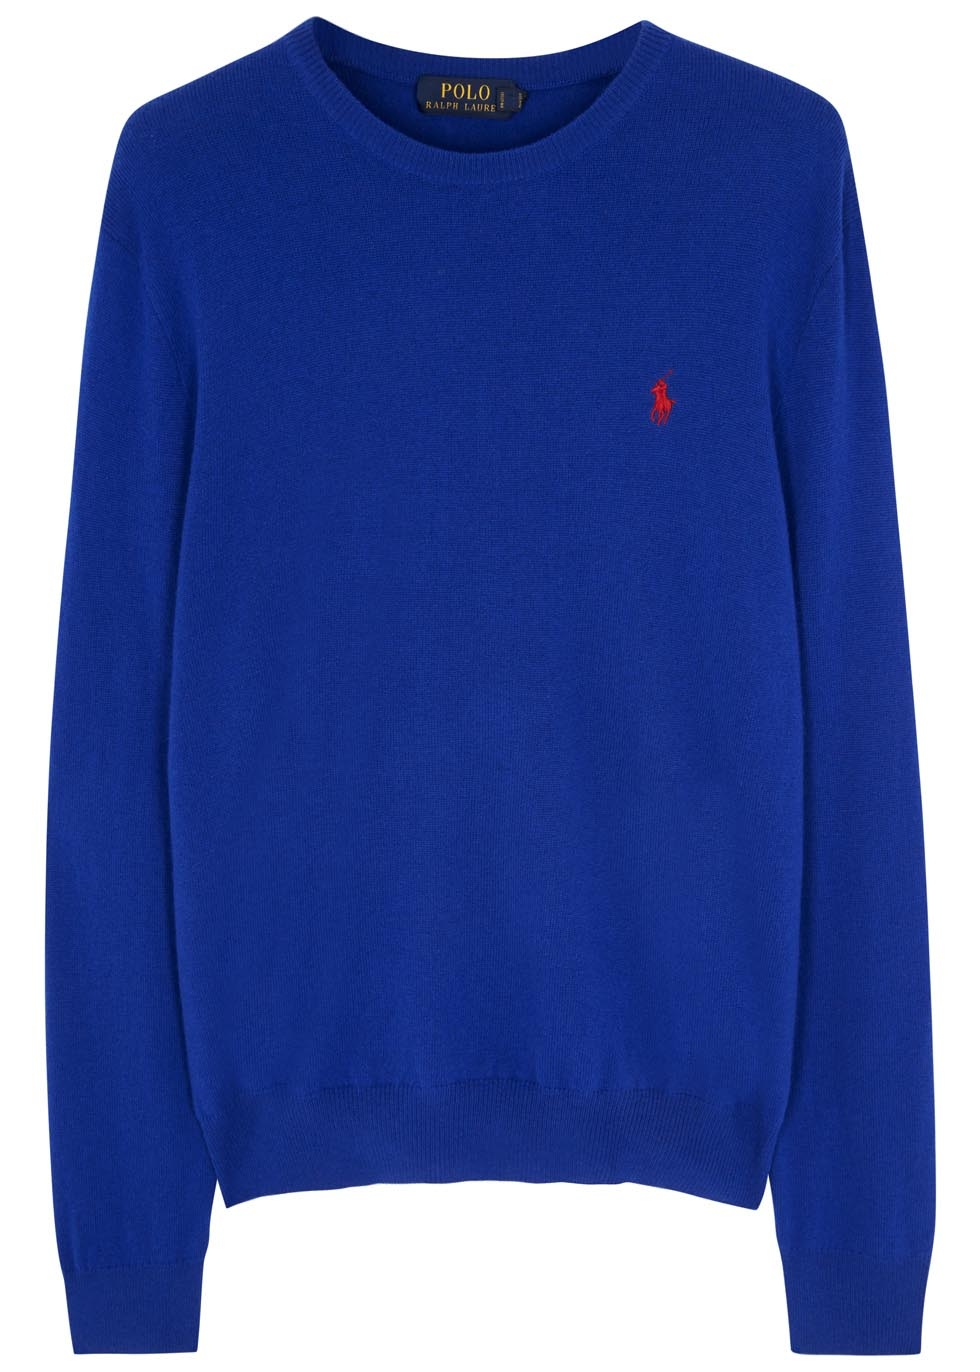 Polo Ralph Lauren Royal Blue Wool Jumper in Blue for Men - Lyst